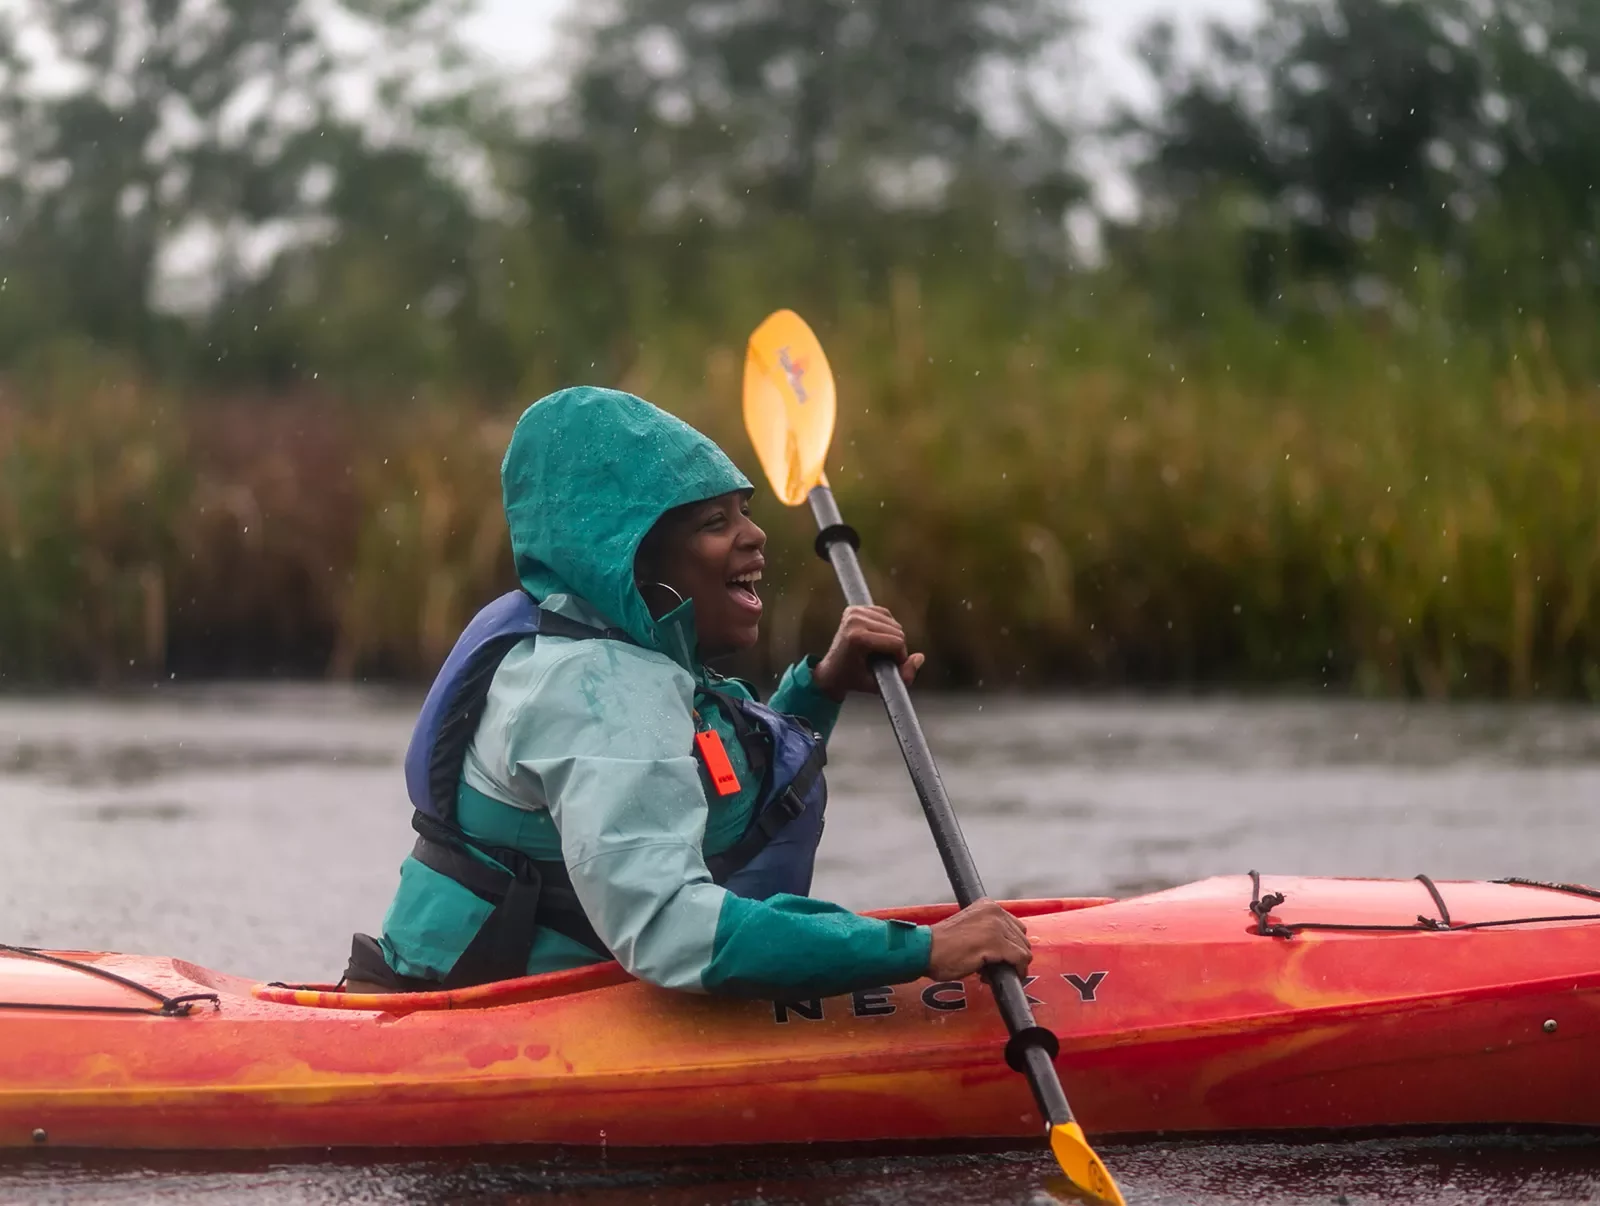 Guest kayaking in rain.